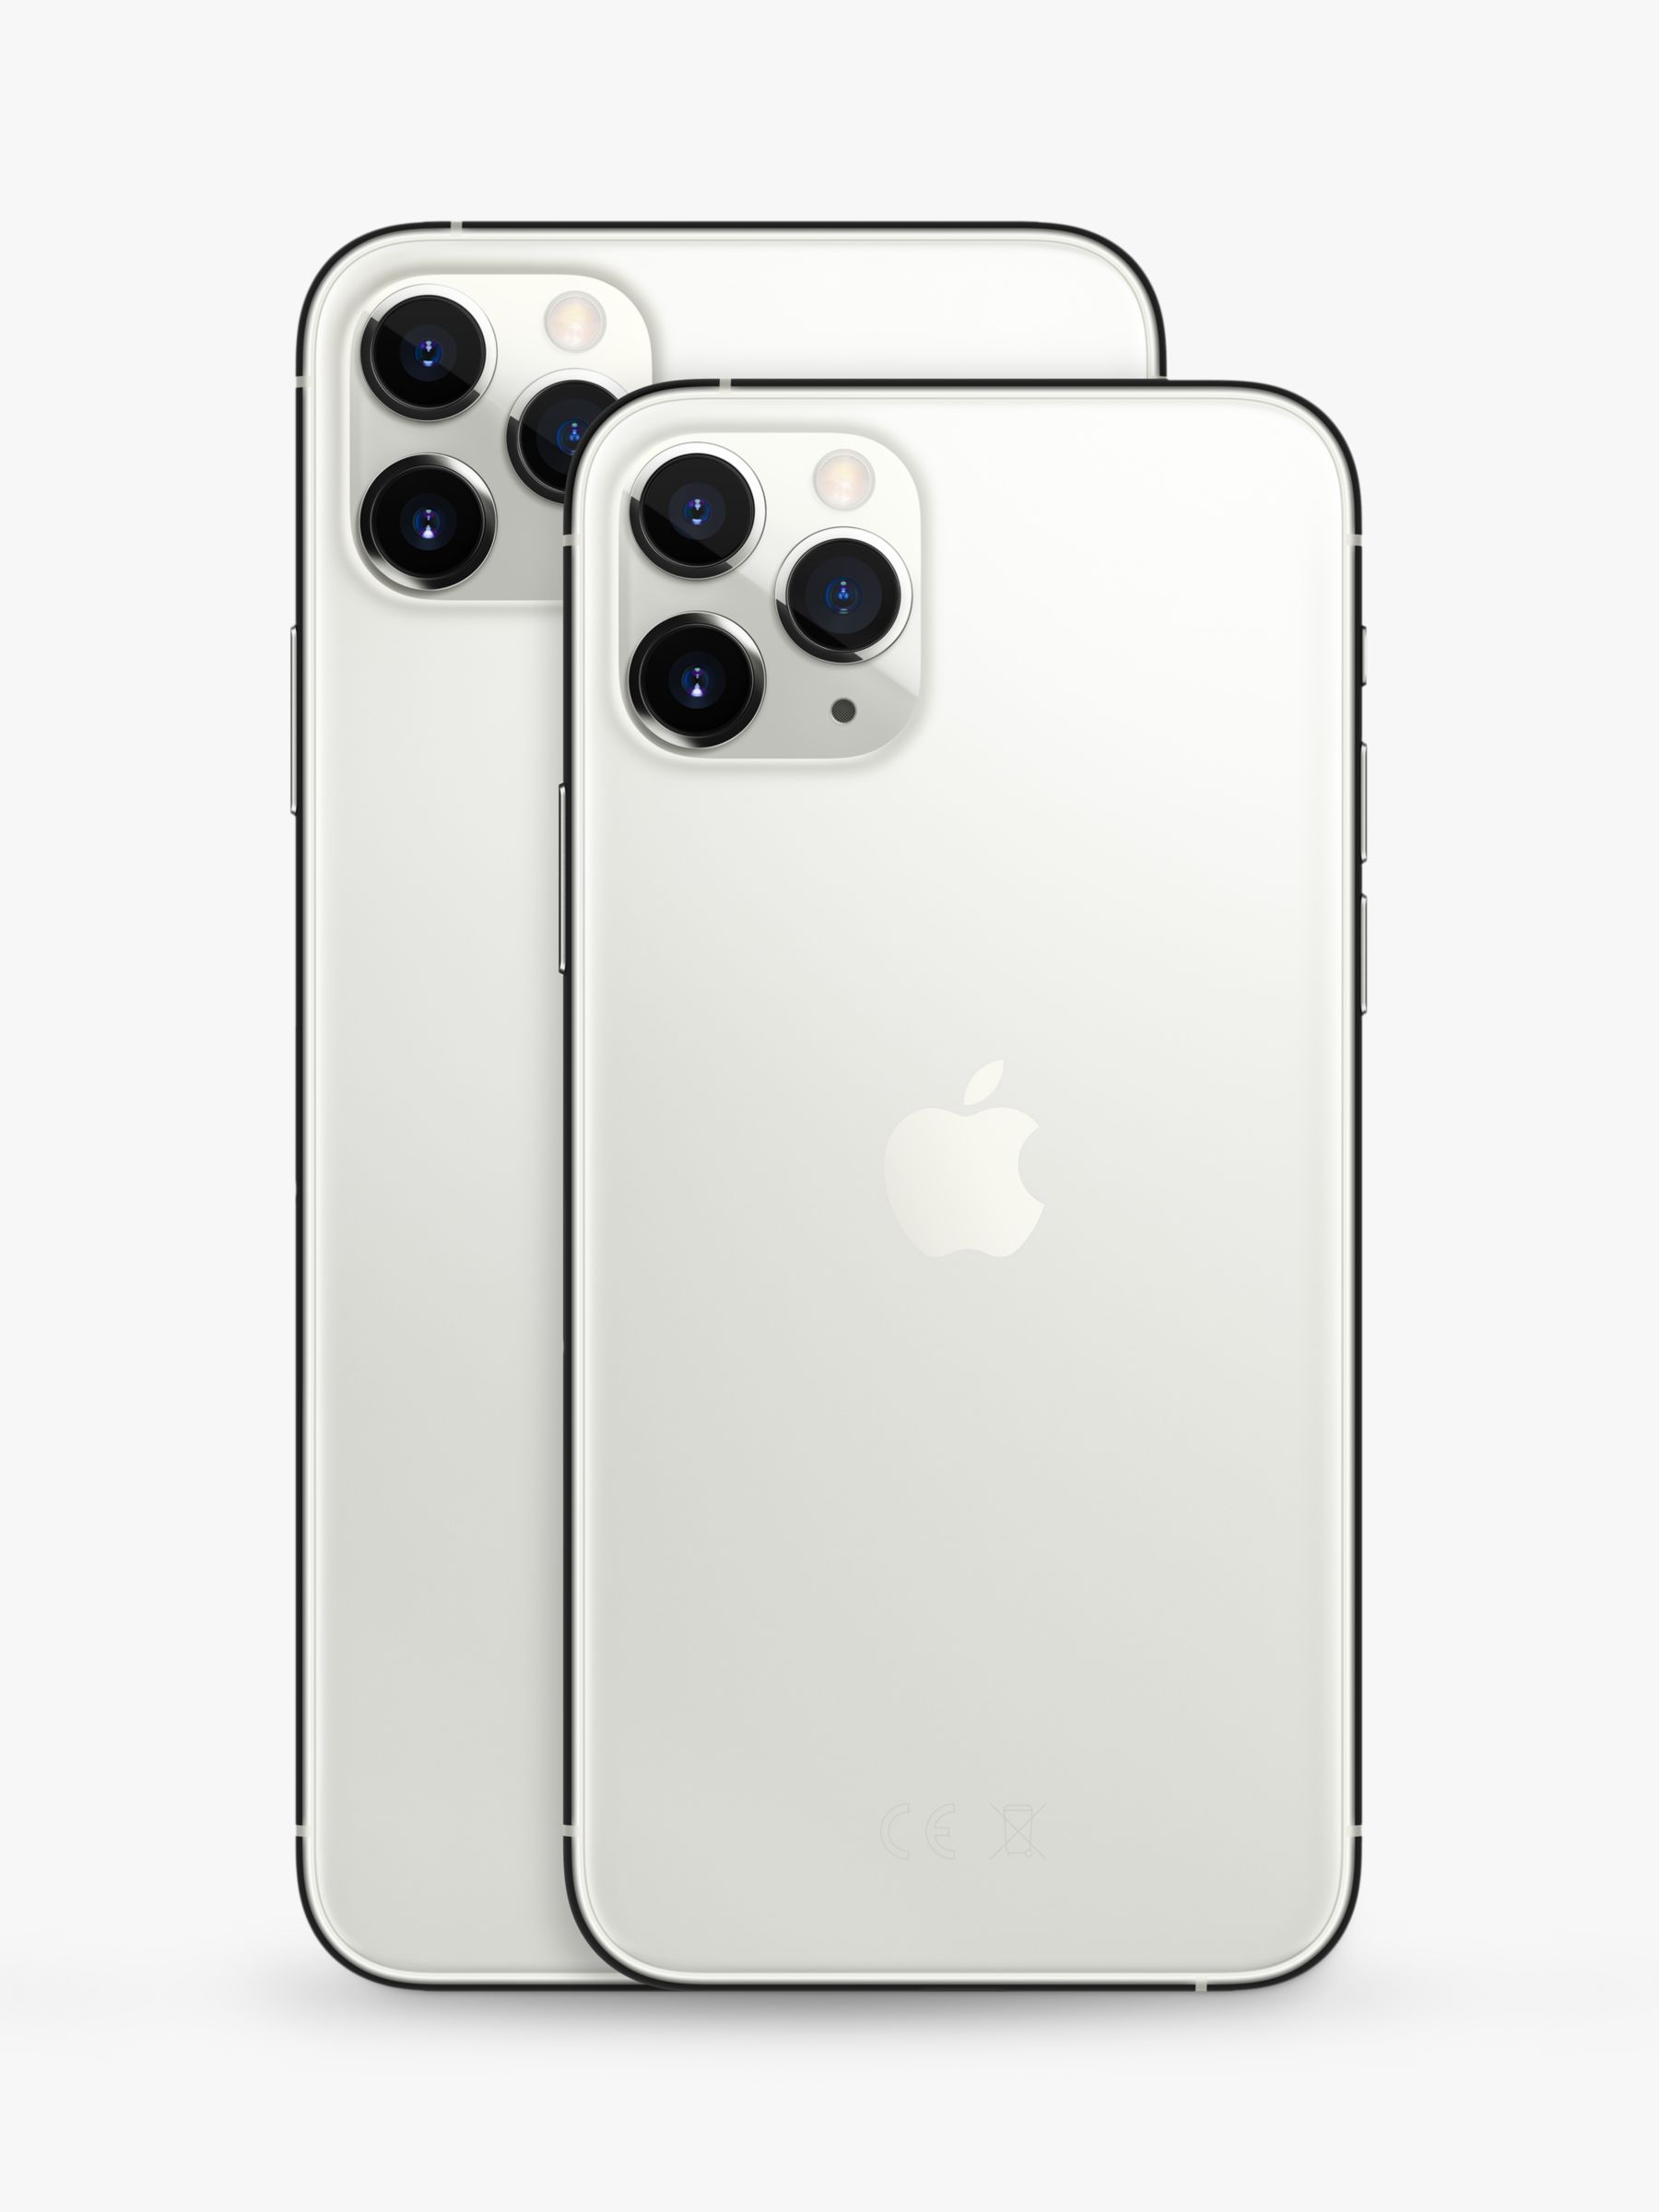 Apple Iphone 11 Pro Max Ios 6 5 4g Lte Sim Free 256gb At